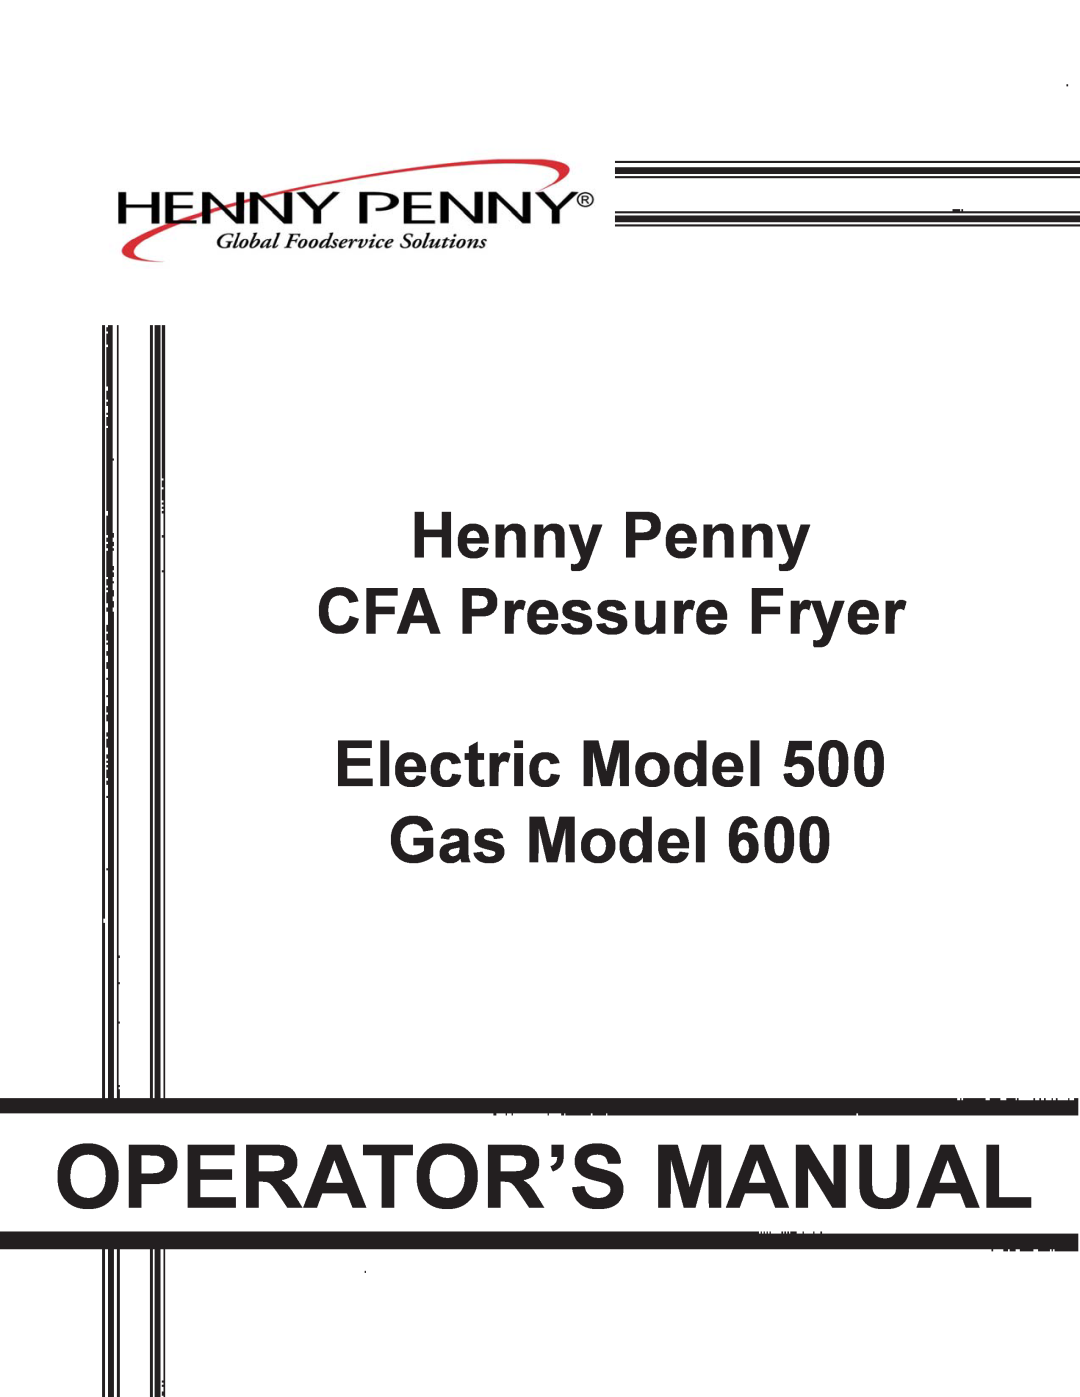 Henny Penny 500, 600 manual Operator’S Manual, Henny Penny CFA Pressure Fryer Electric Model Gas Model 